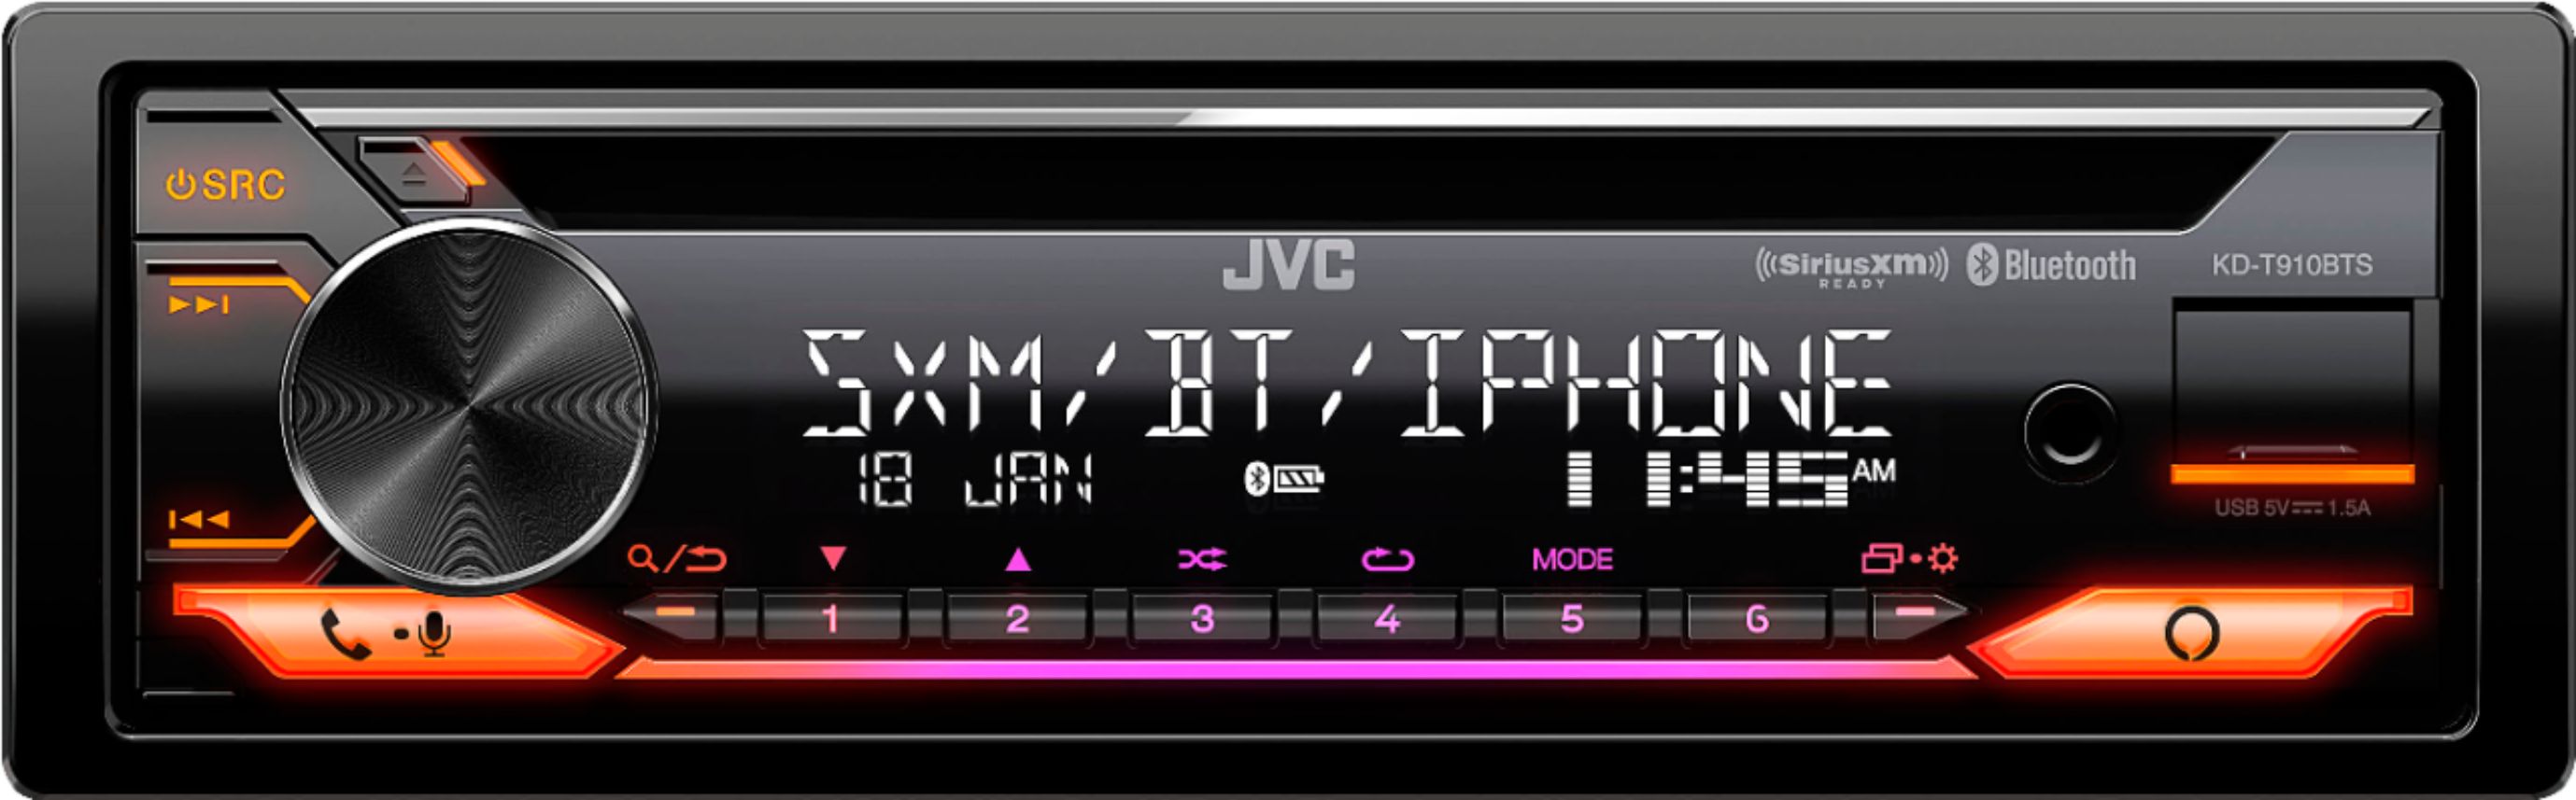 Rafflesia Arnoldi Flikkeren als je kunt JVC In-Dash CD/DM Receiver Built-in Bluetooth Satellite Radio-ready with  Detachable Faceplate Black KD-T910BTS - Best Buy